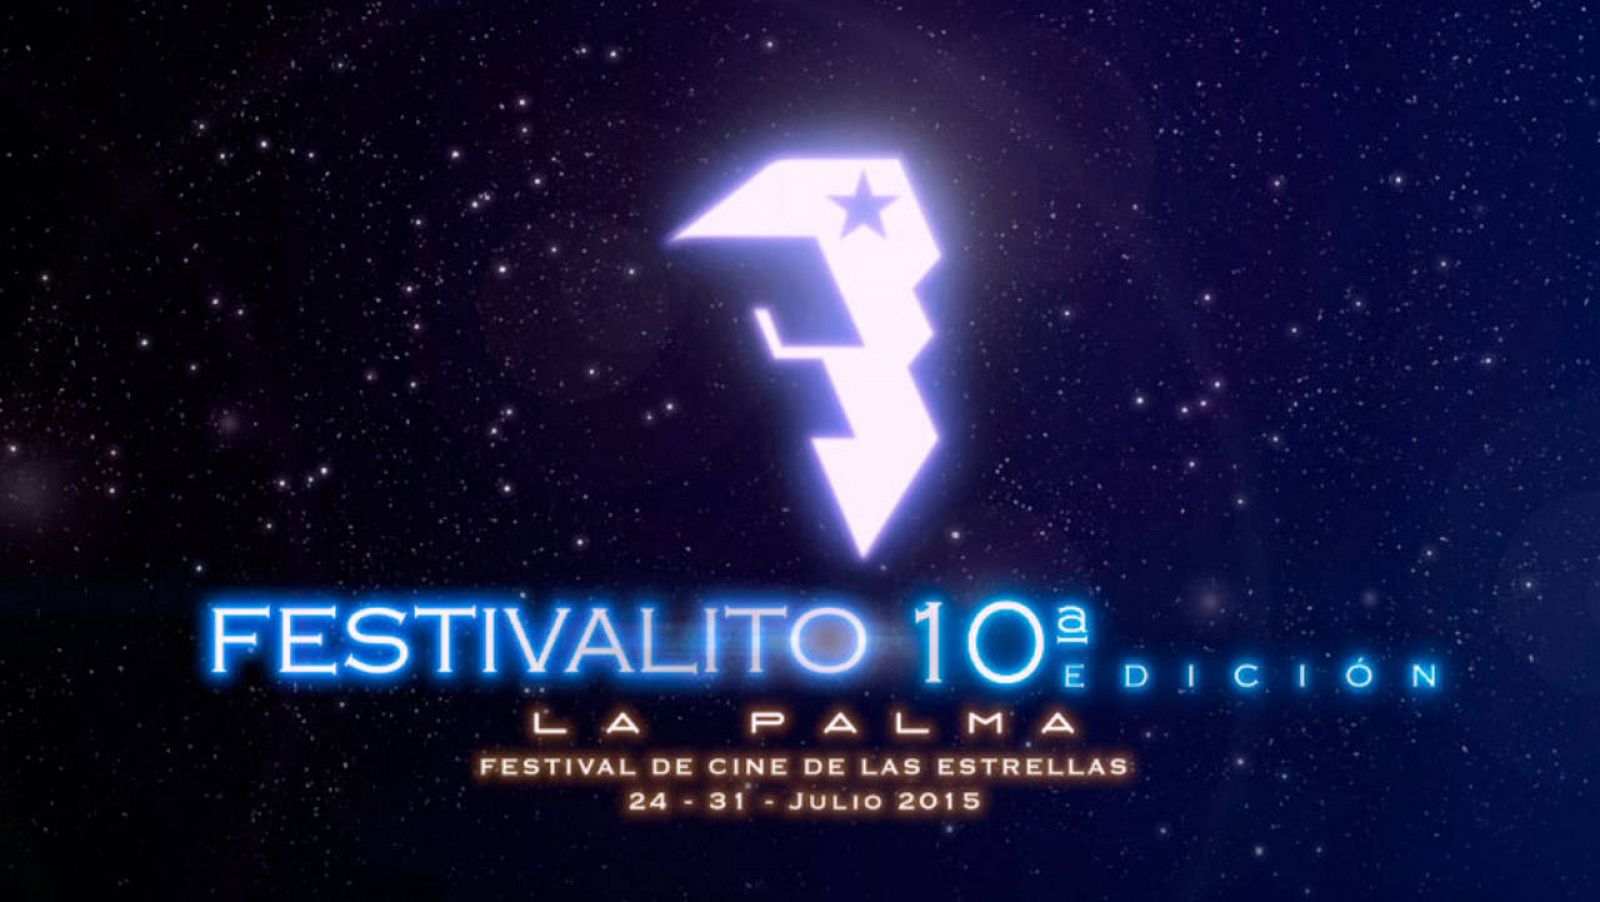  Festivalito La Palma 2015